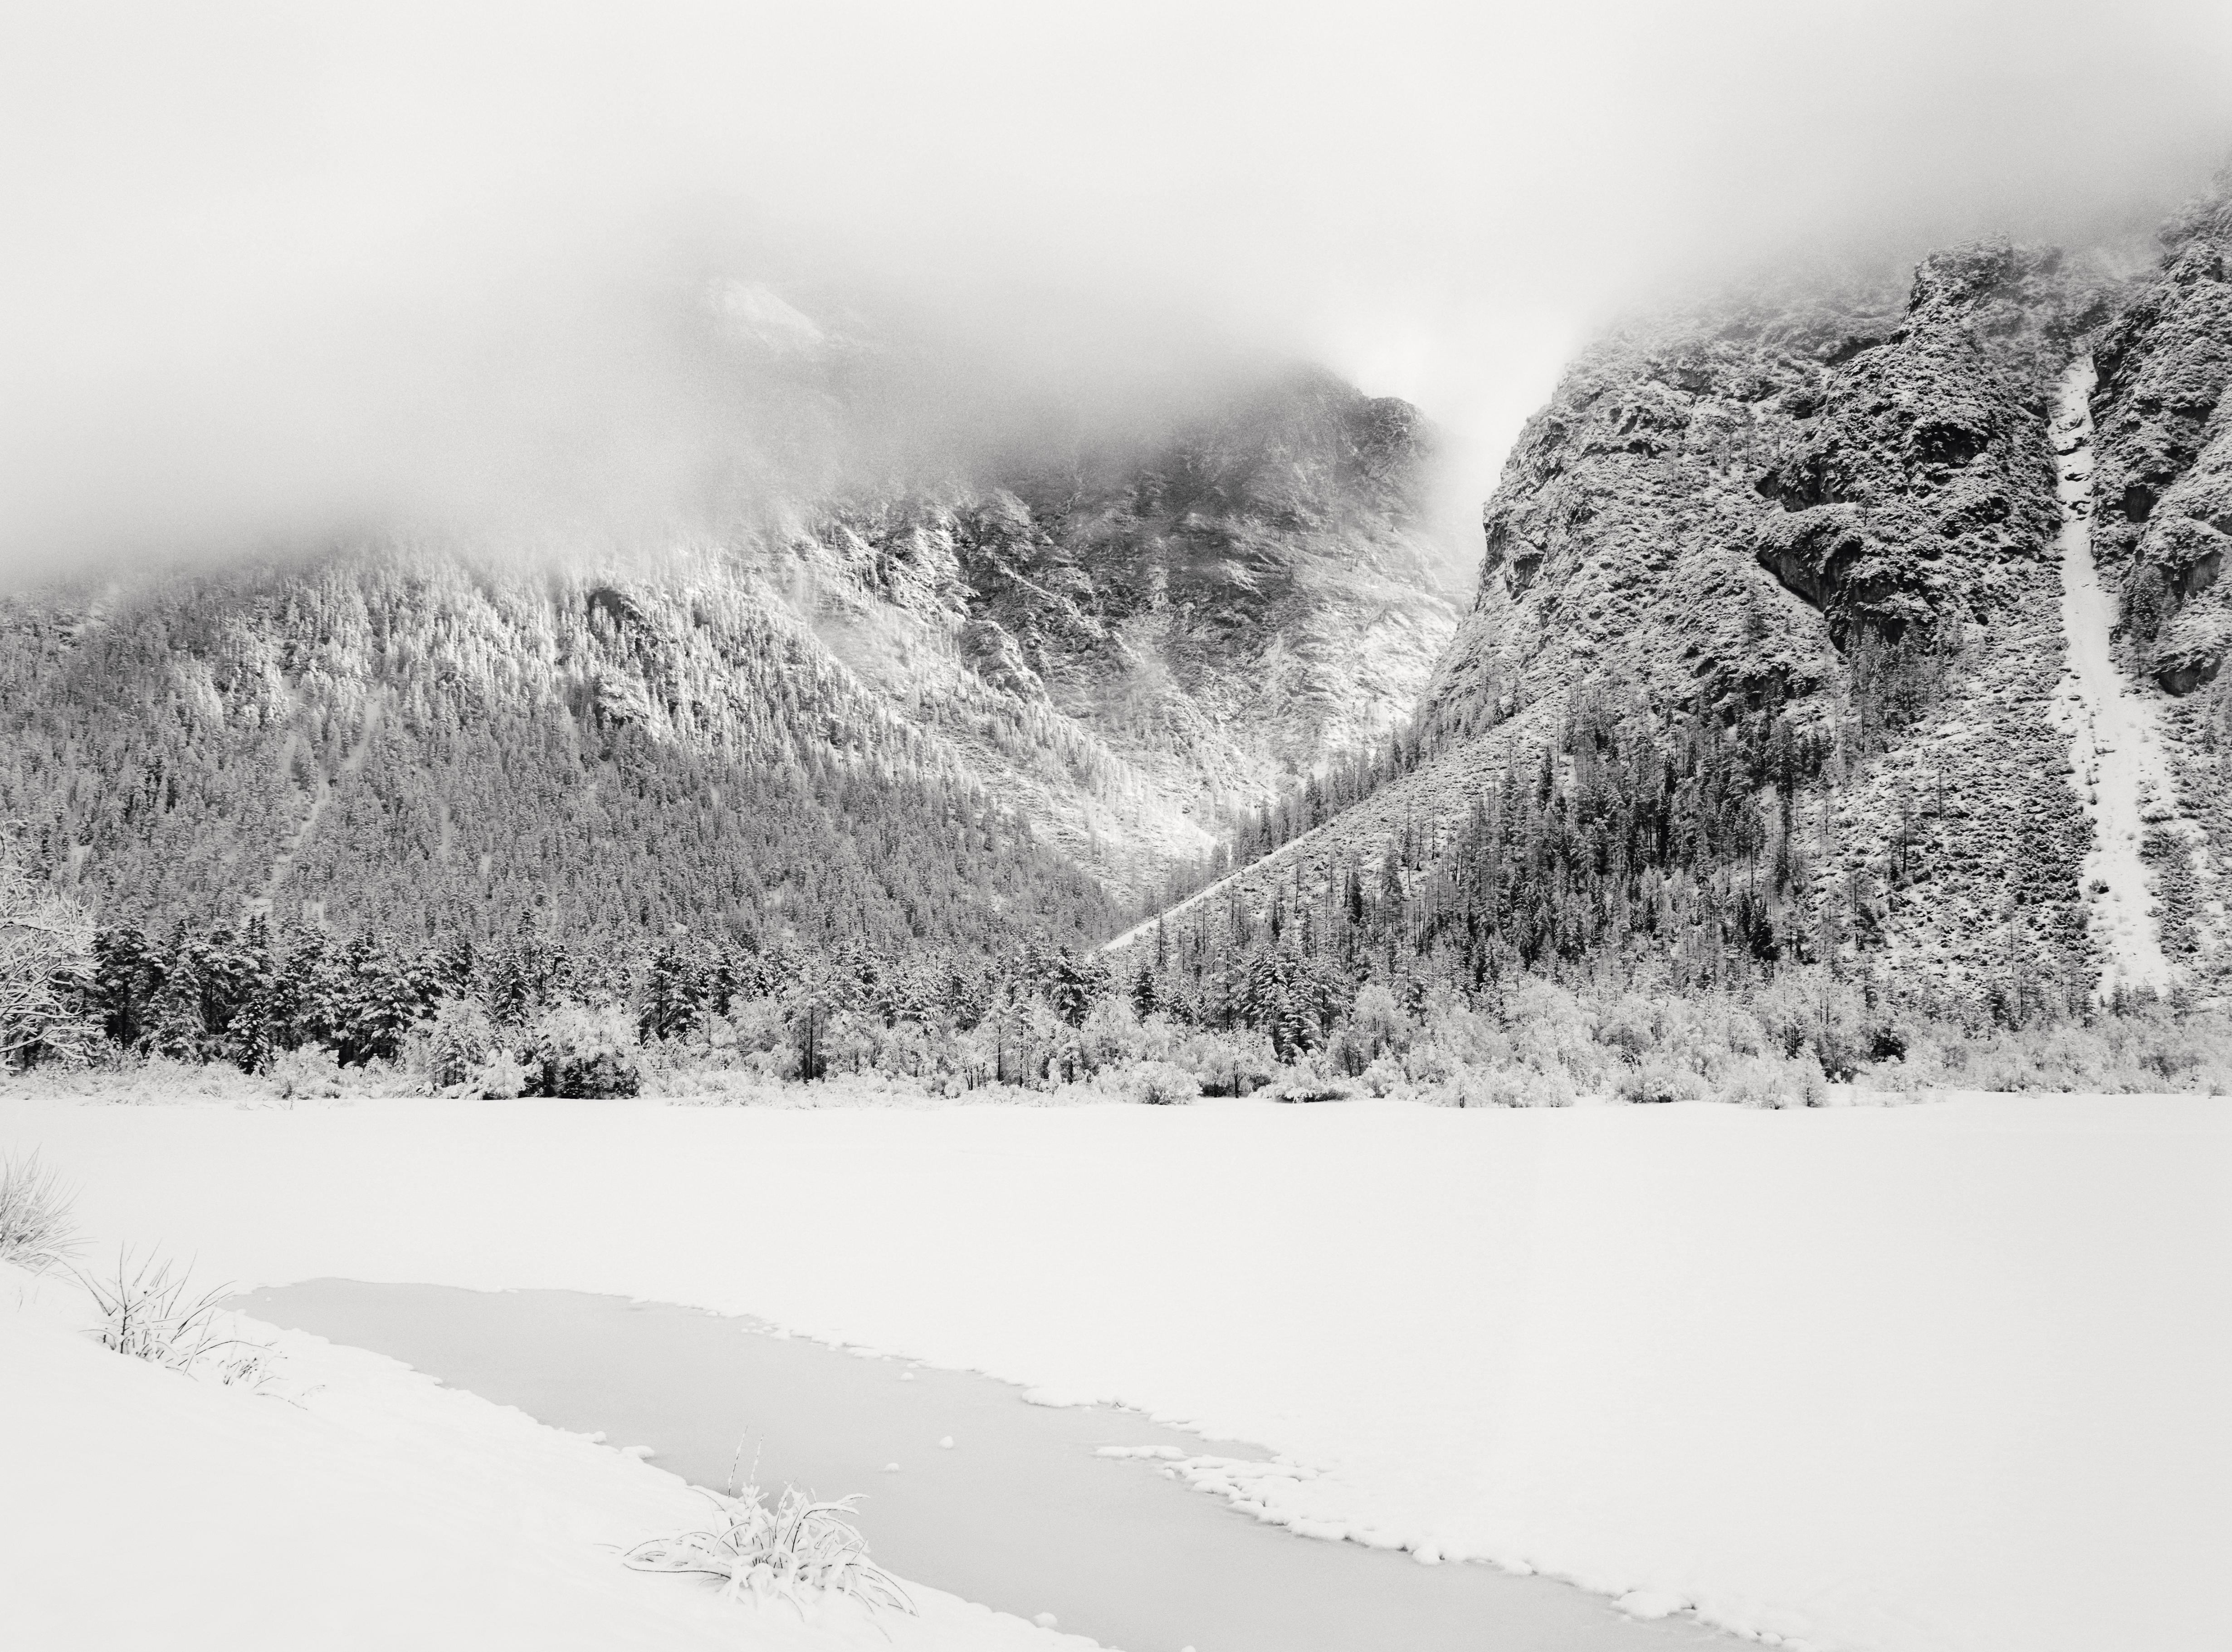 Ugne Pouwell Black and White Photograph – Cortina D'Ampezzo Nr.2, Analogue Schwarz-Weiß-Landschaftsfotografie, Ltd. 20